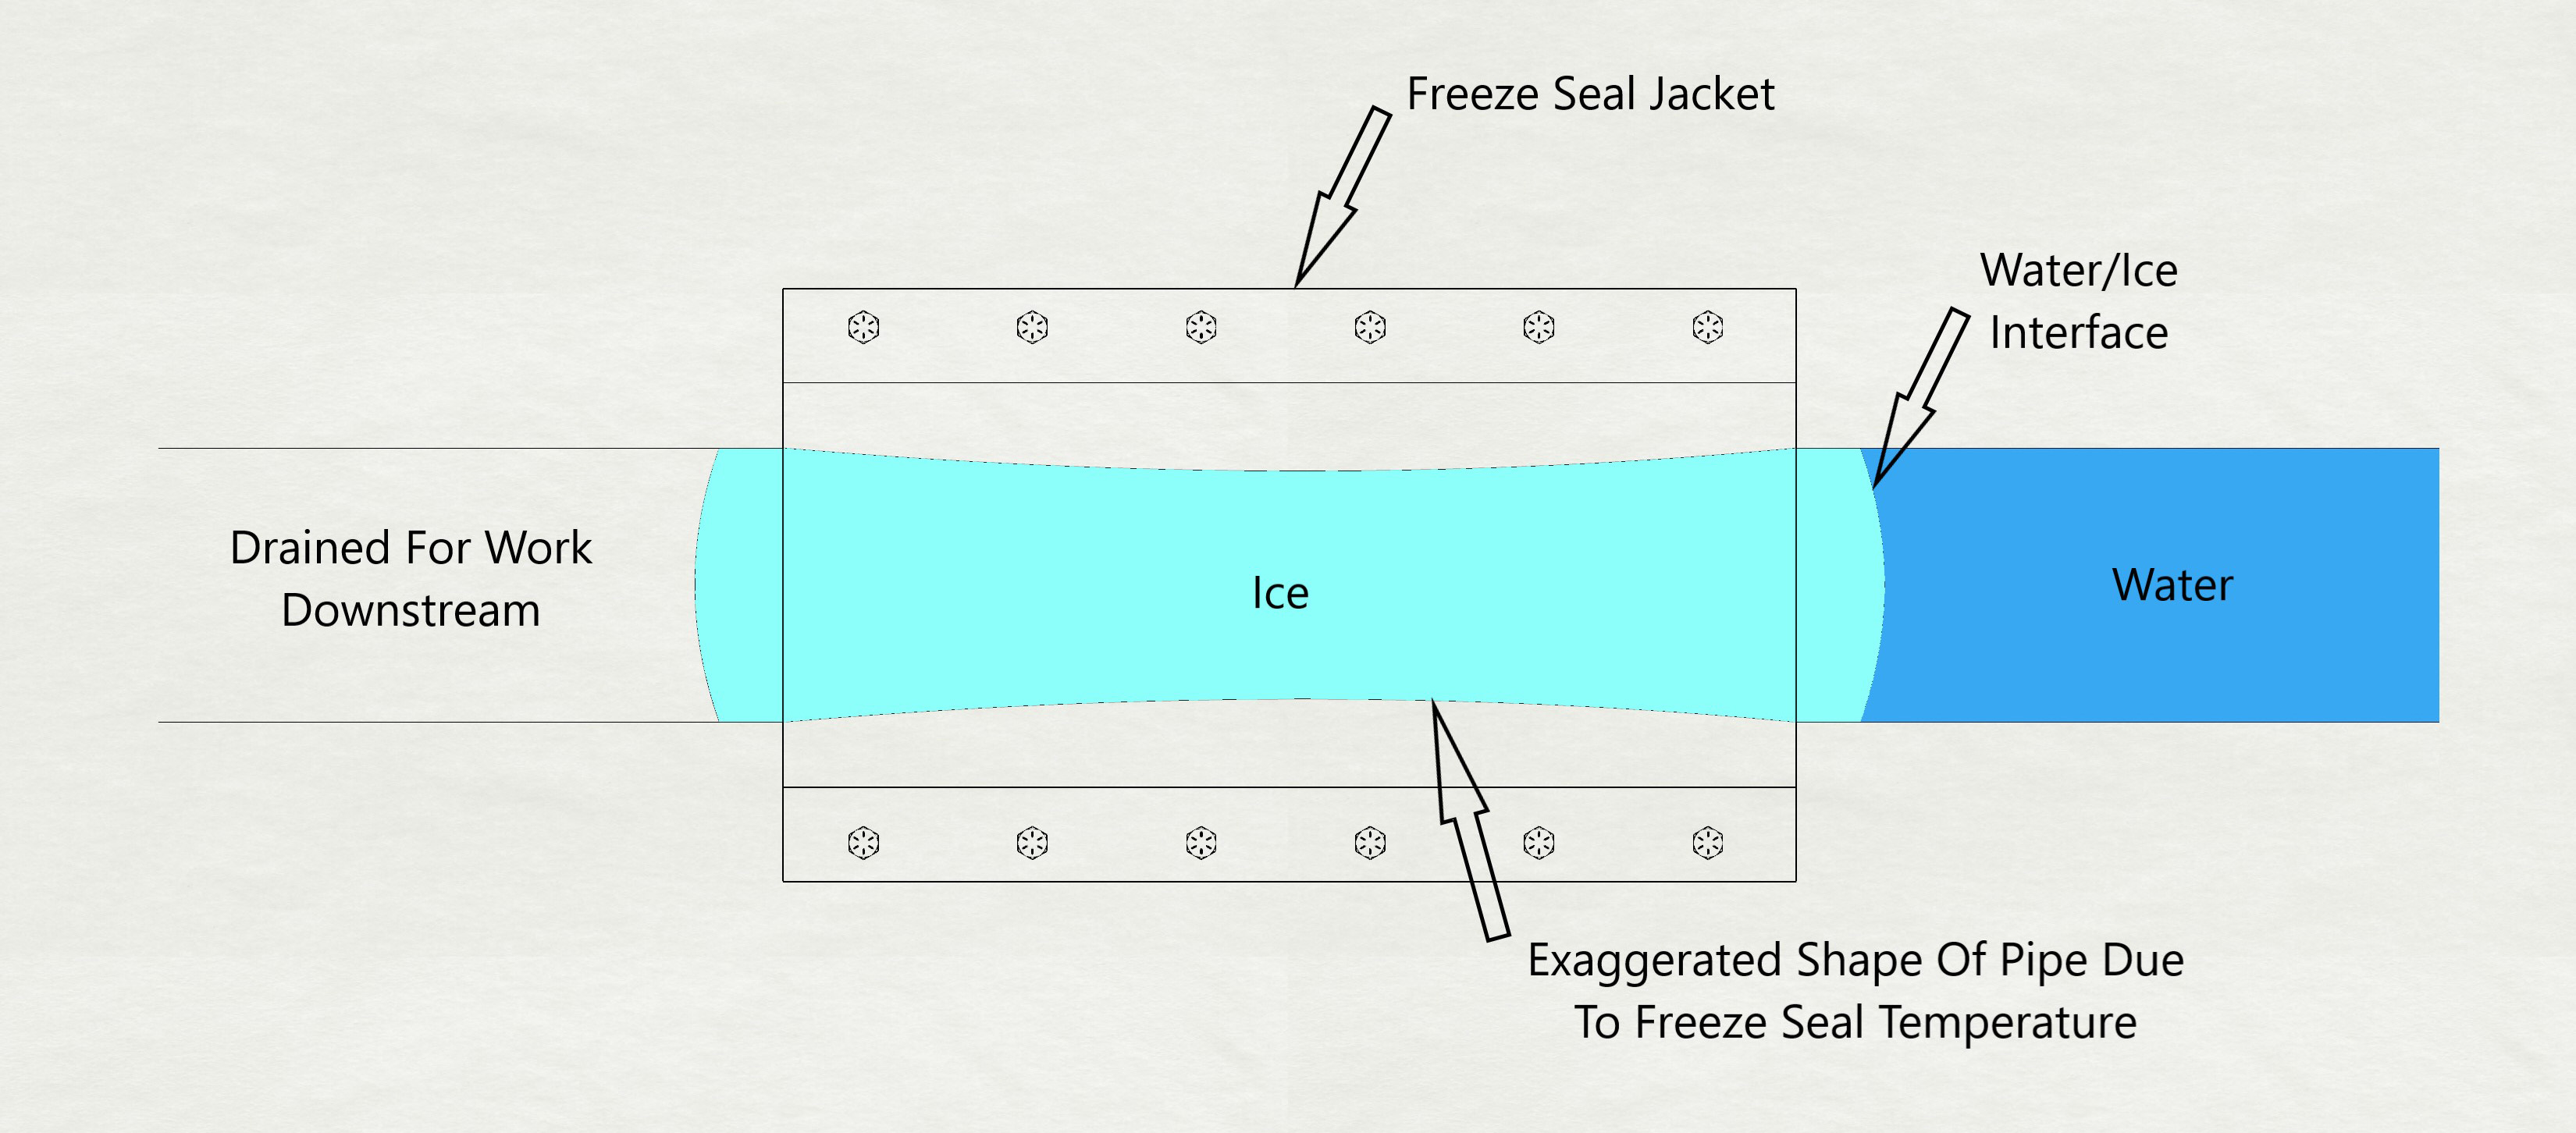 Freeze Seal Jacket